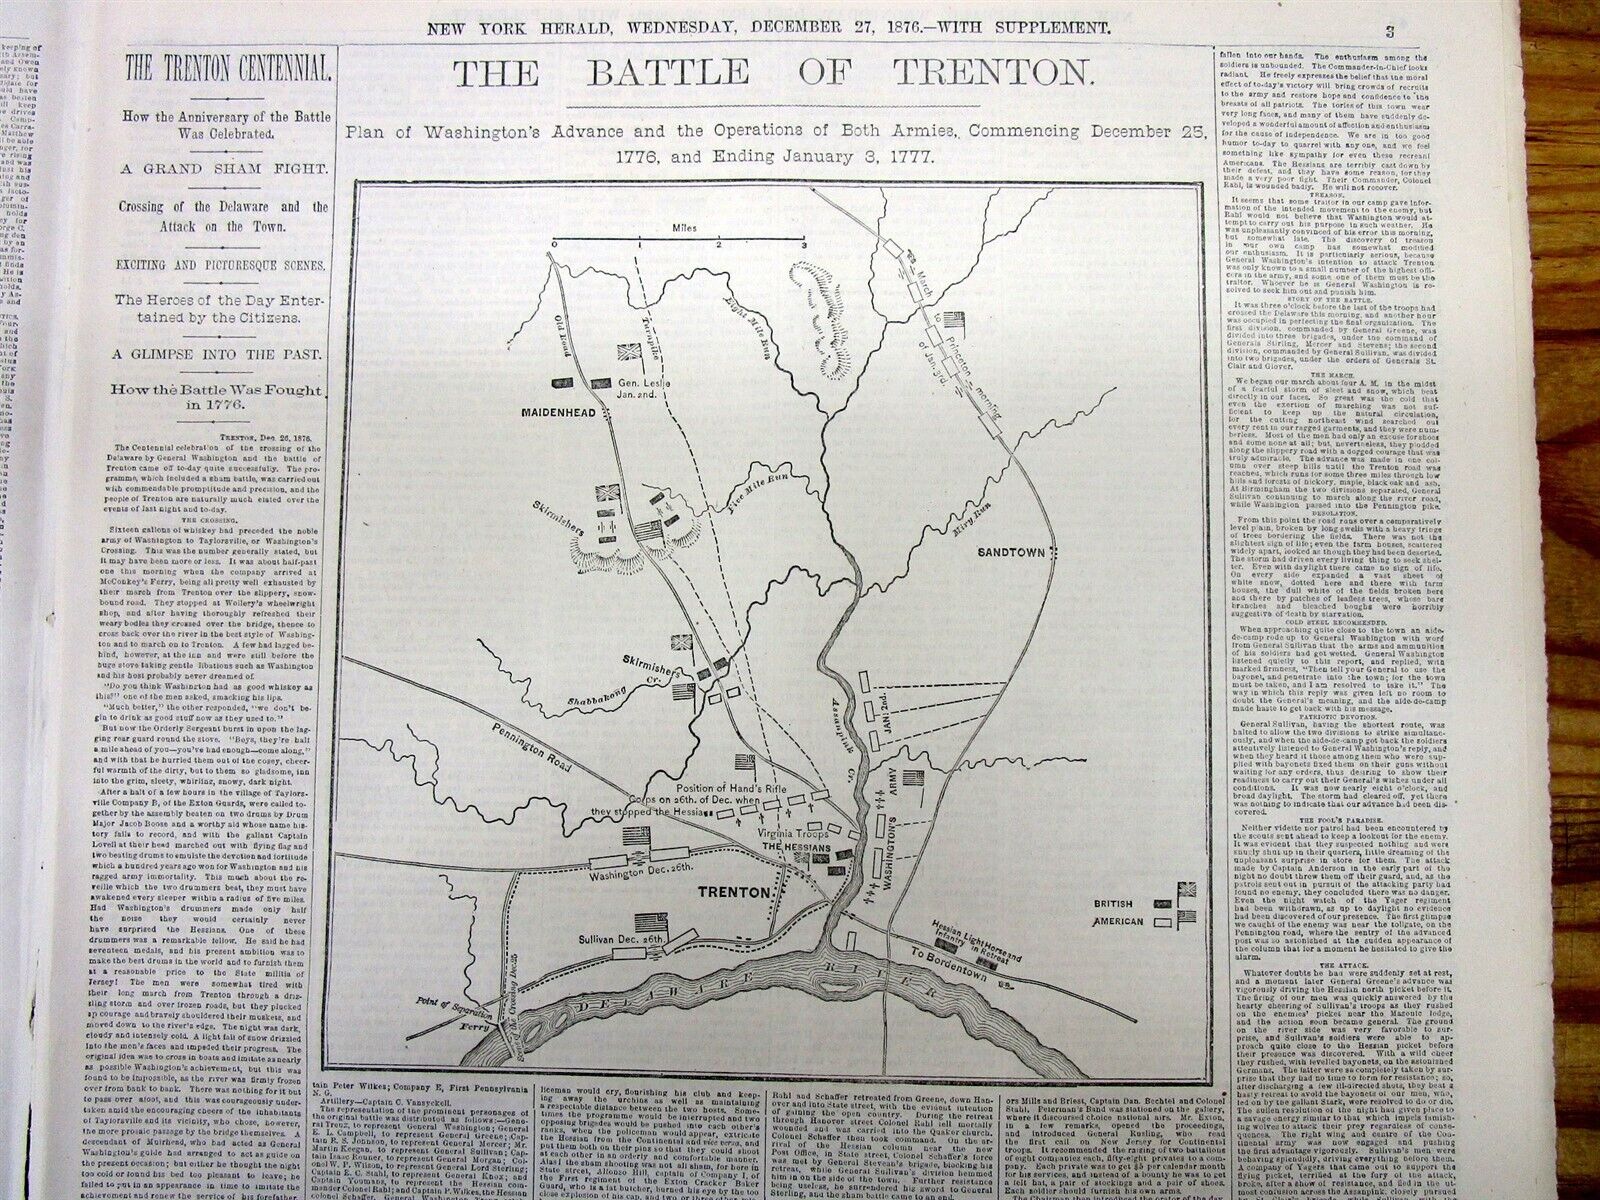 1876 newspaper w MAP & text report CENTENIAL CELEBRATION ofTHE BATTLE OF TRENTON